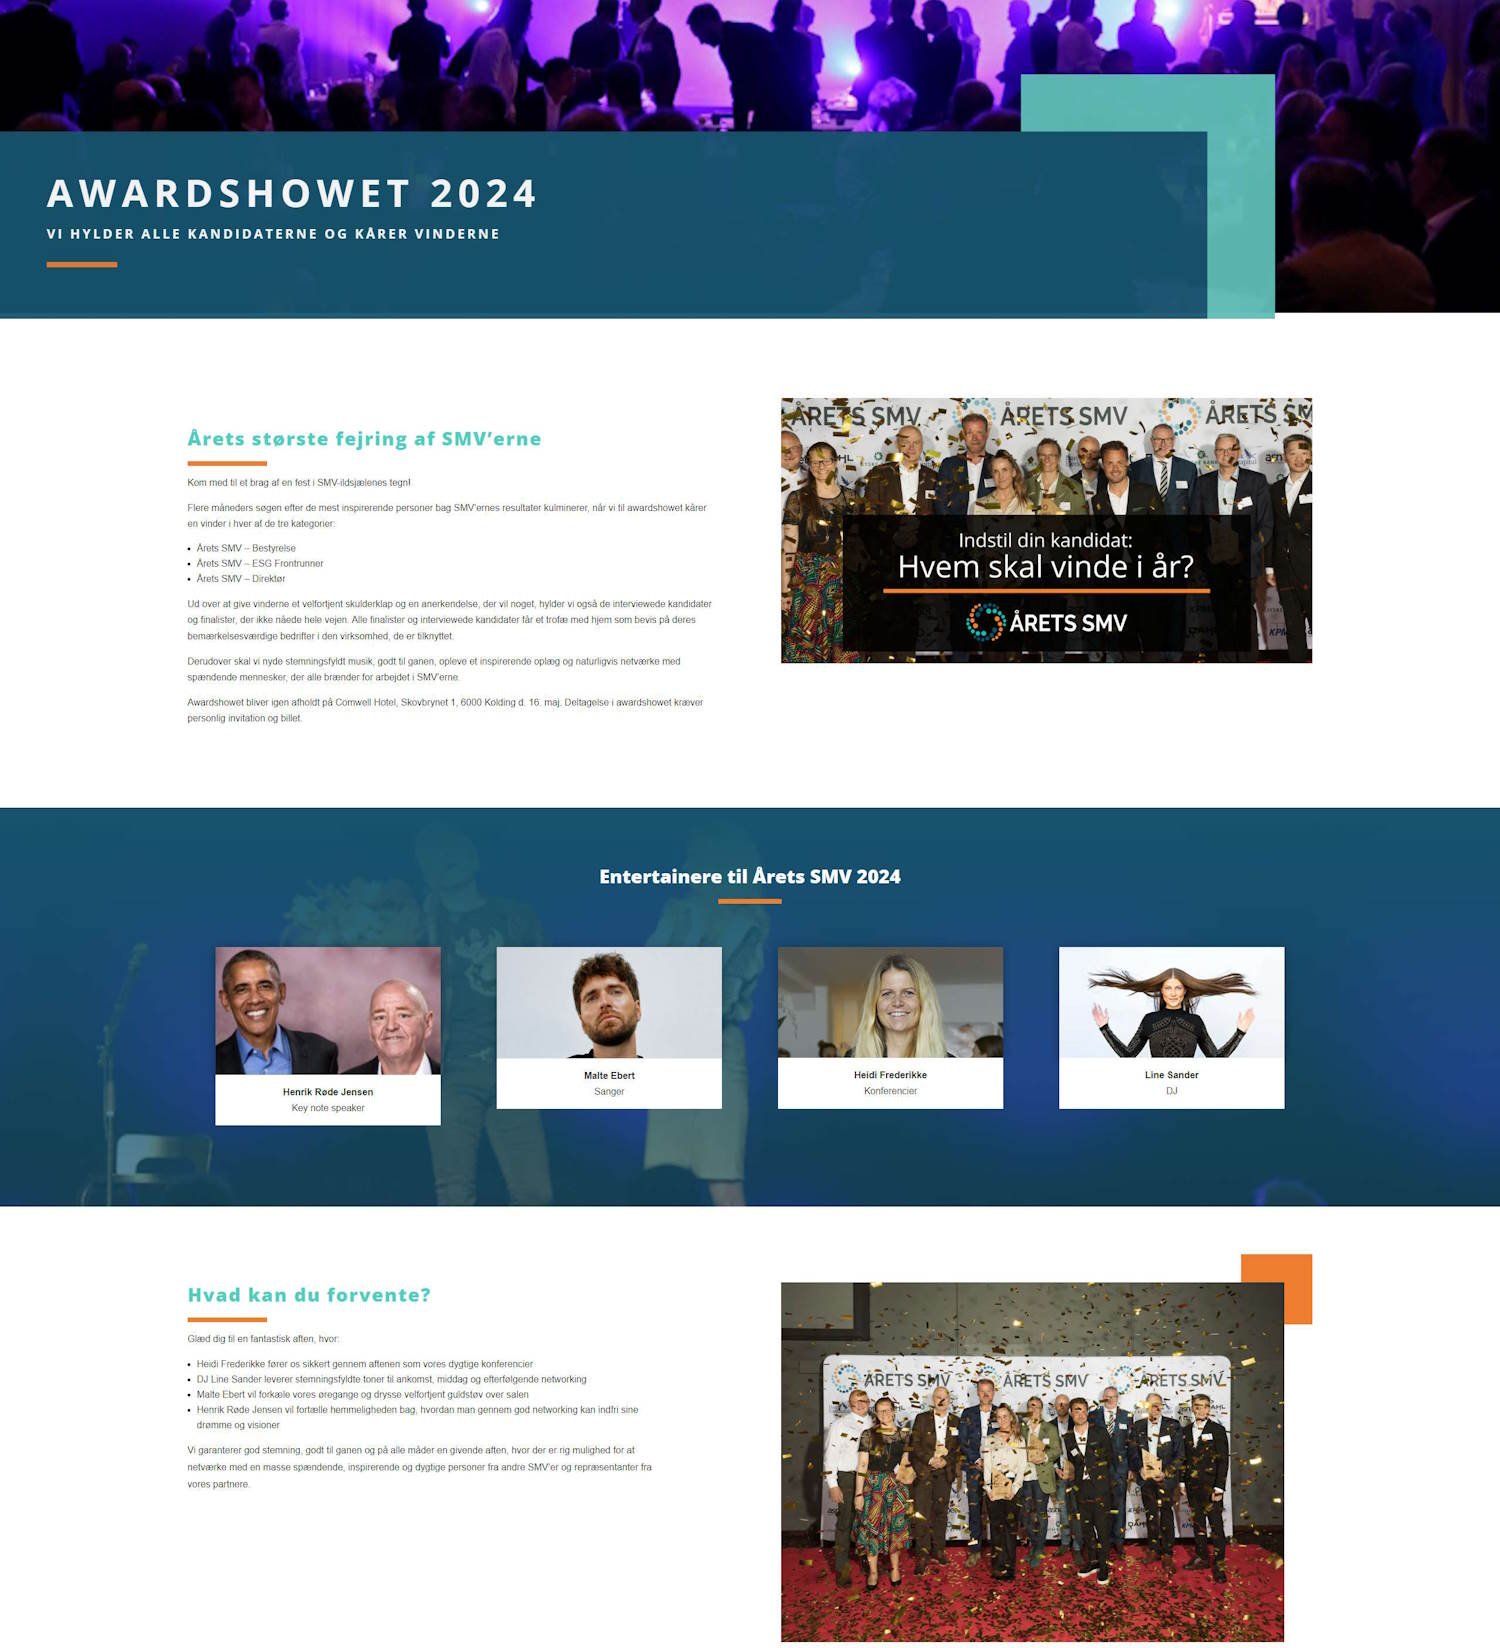 årets smv - awardshow 2024